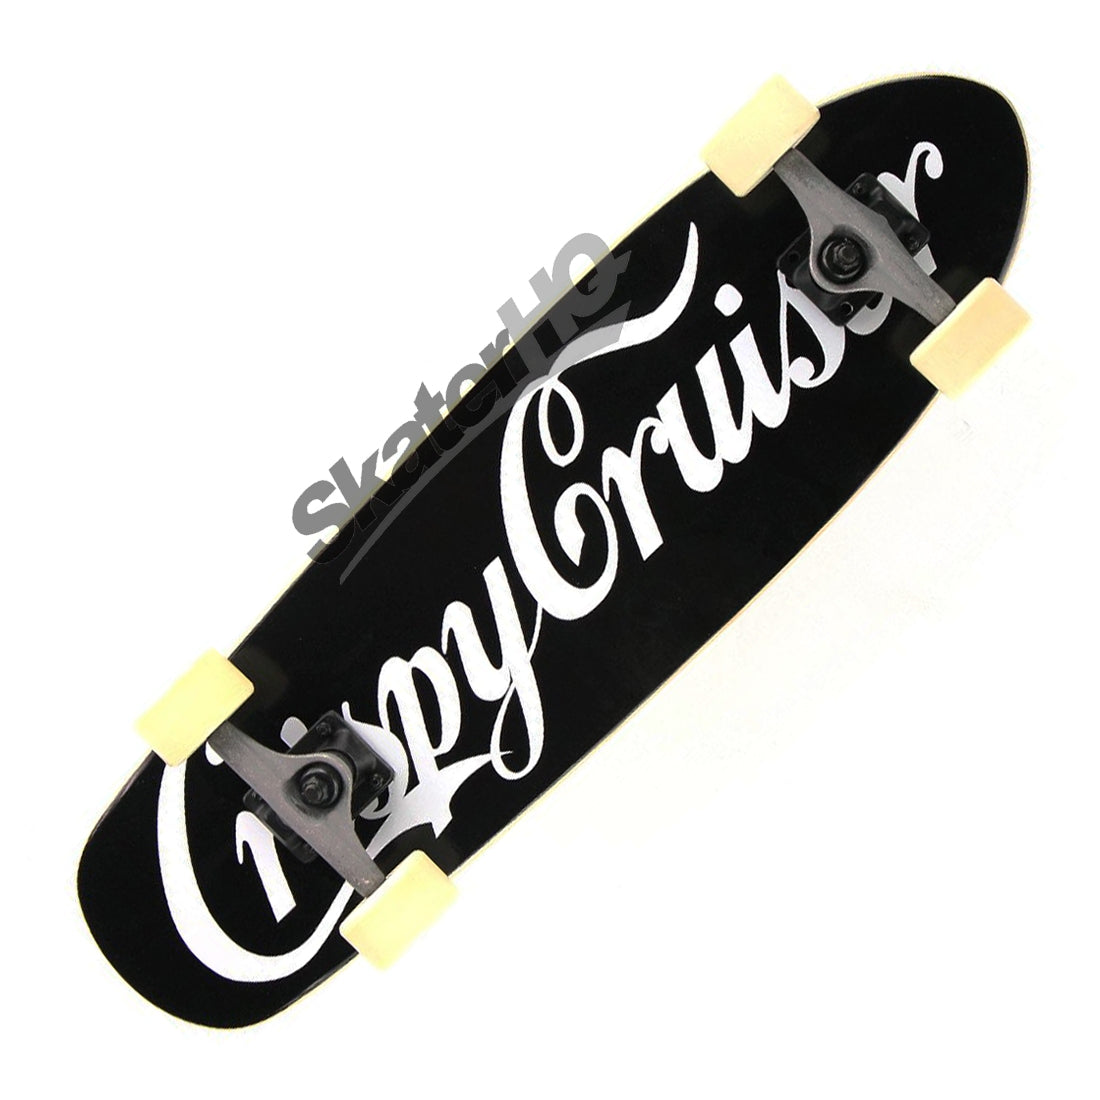 Crispy 8.0 Cruiser Complete - Black Skateboard Compl Cruisers